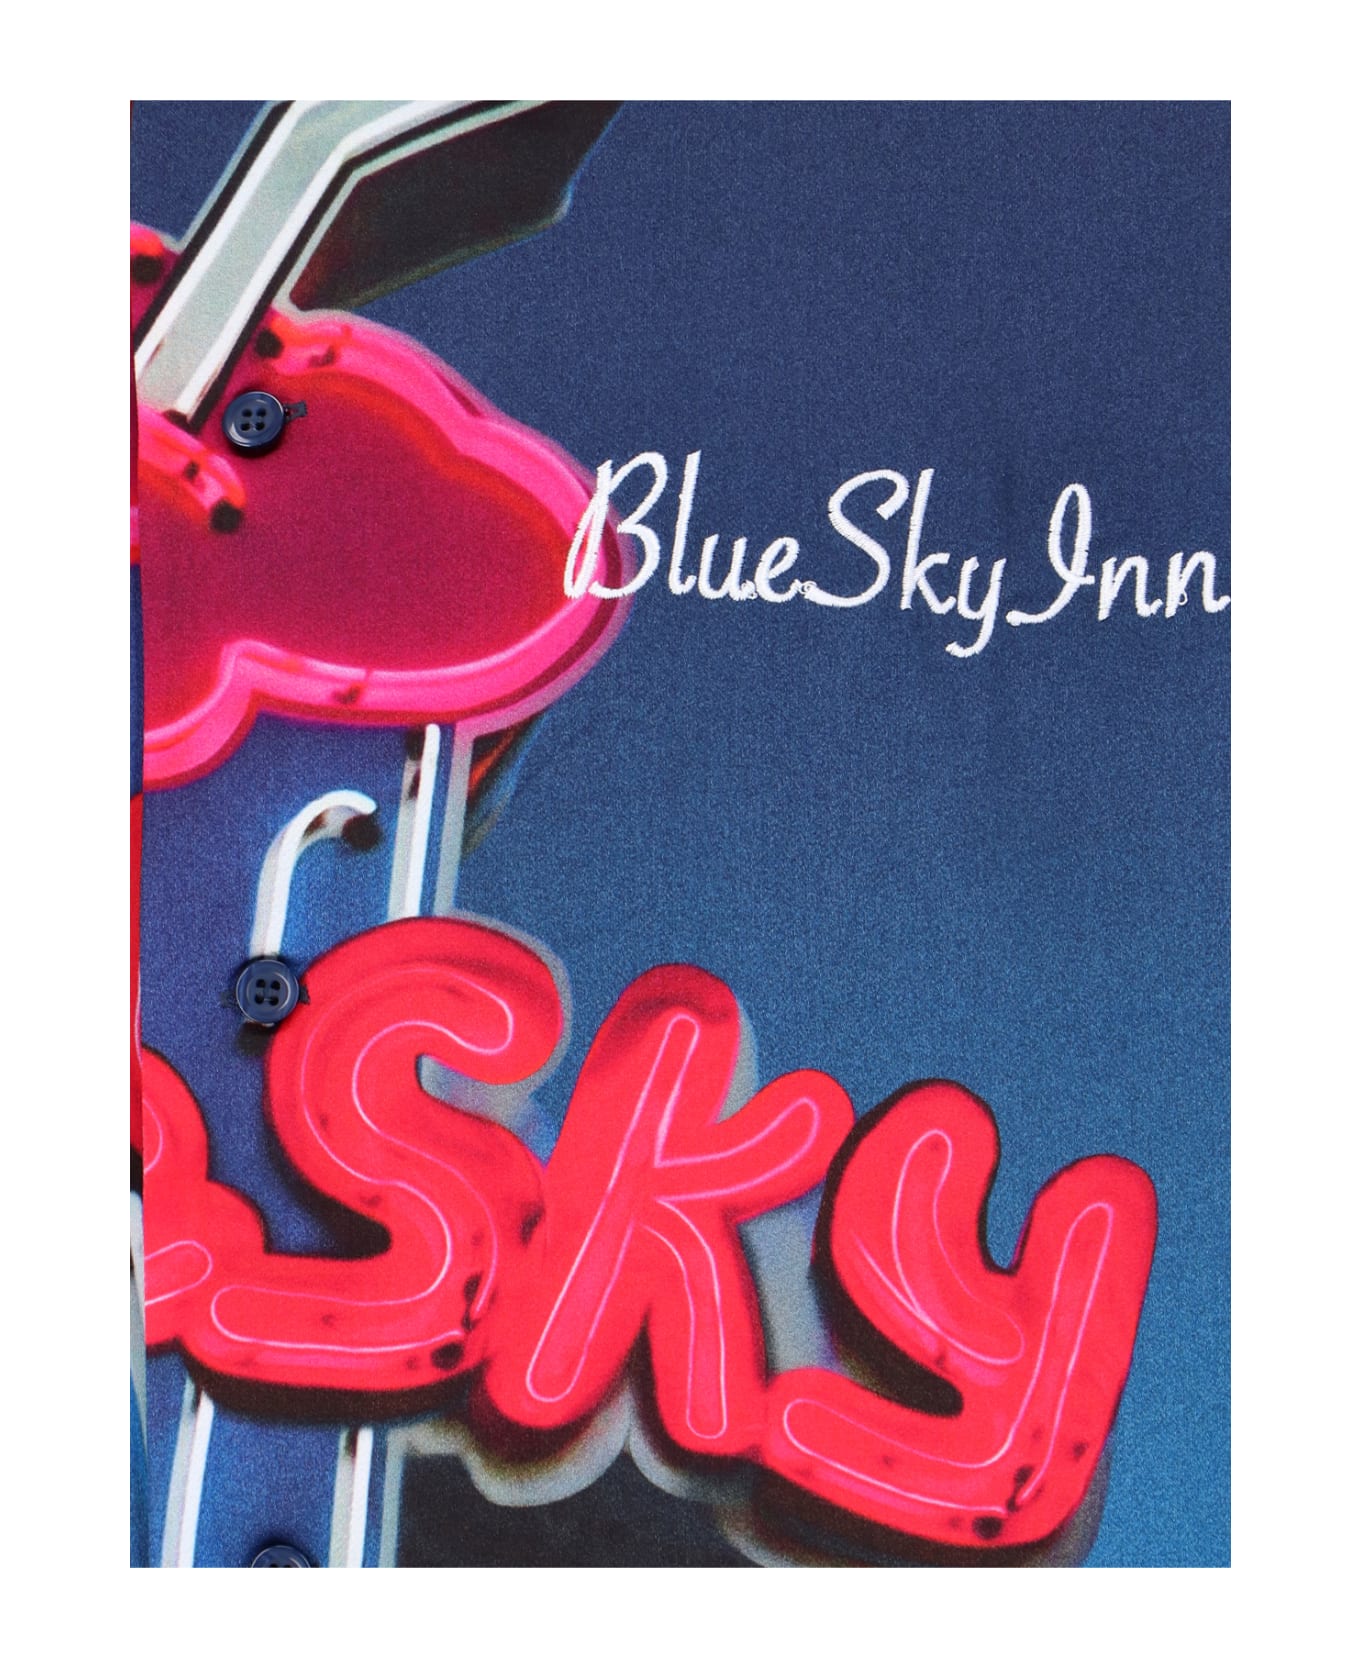 Blue Sky Inn "milkshake" Shirt - Blue